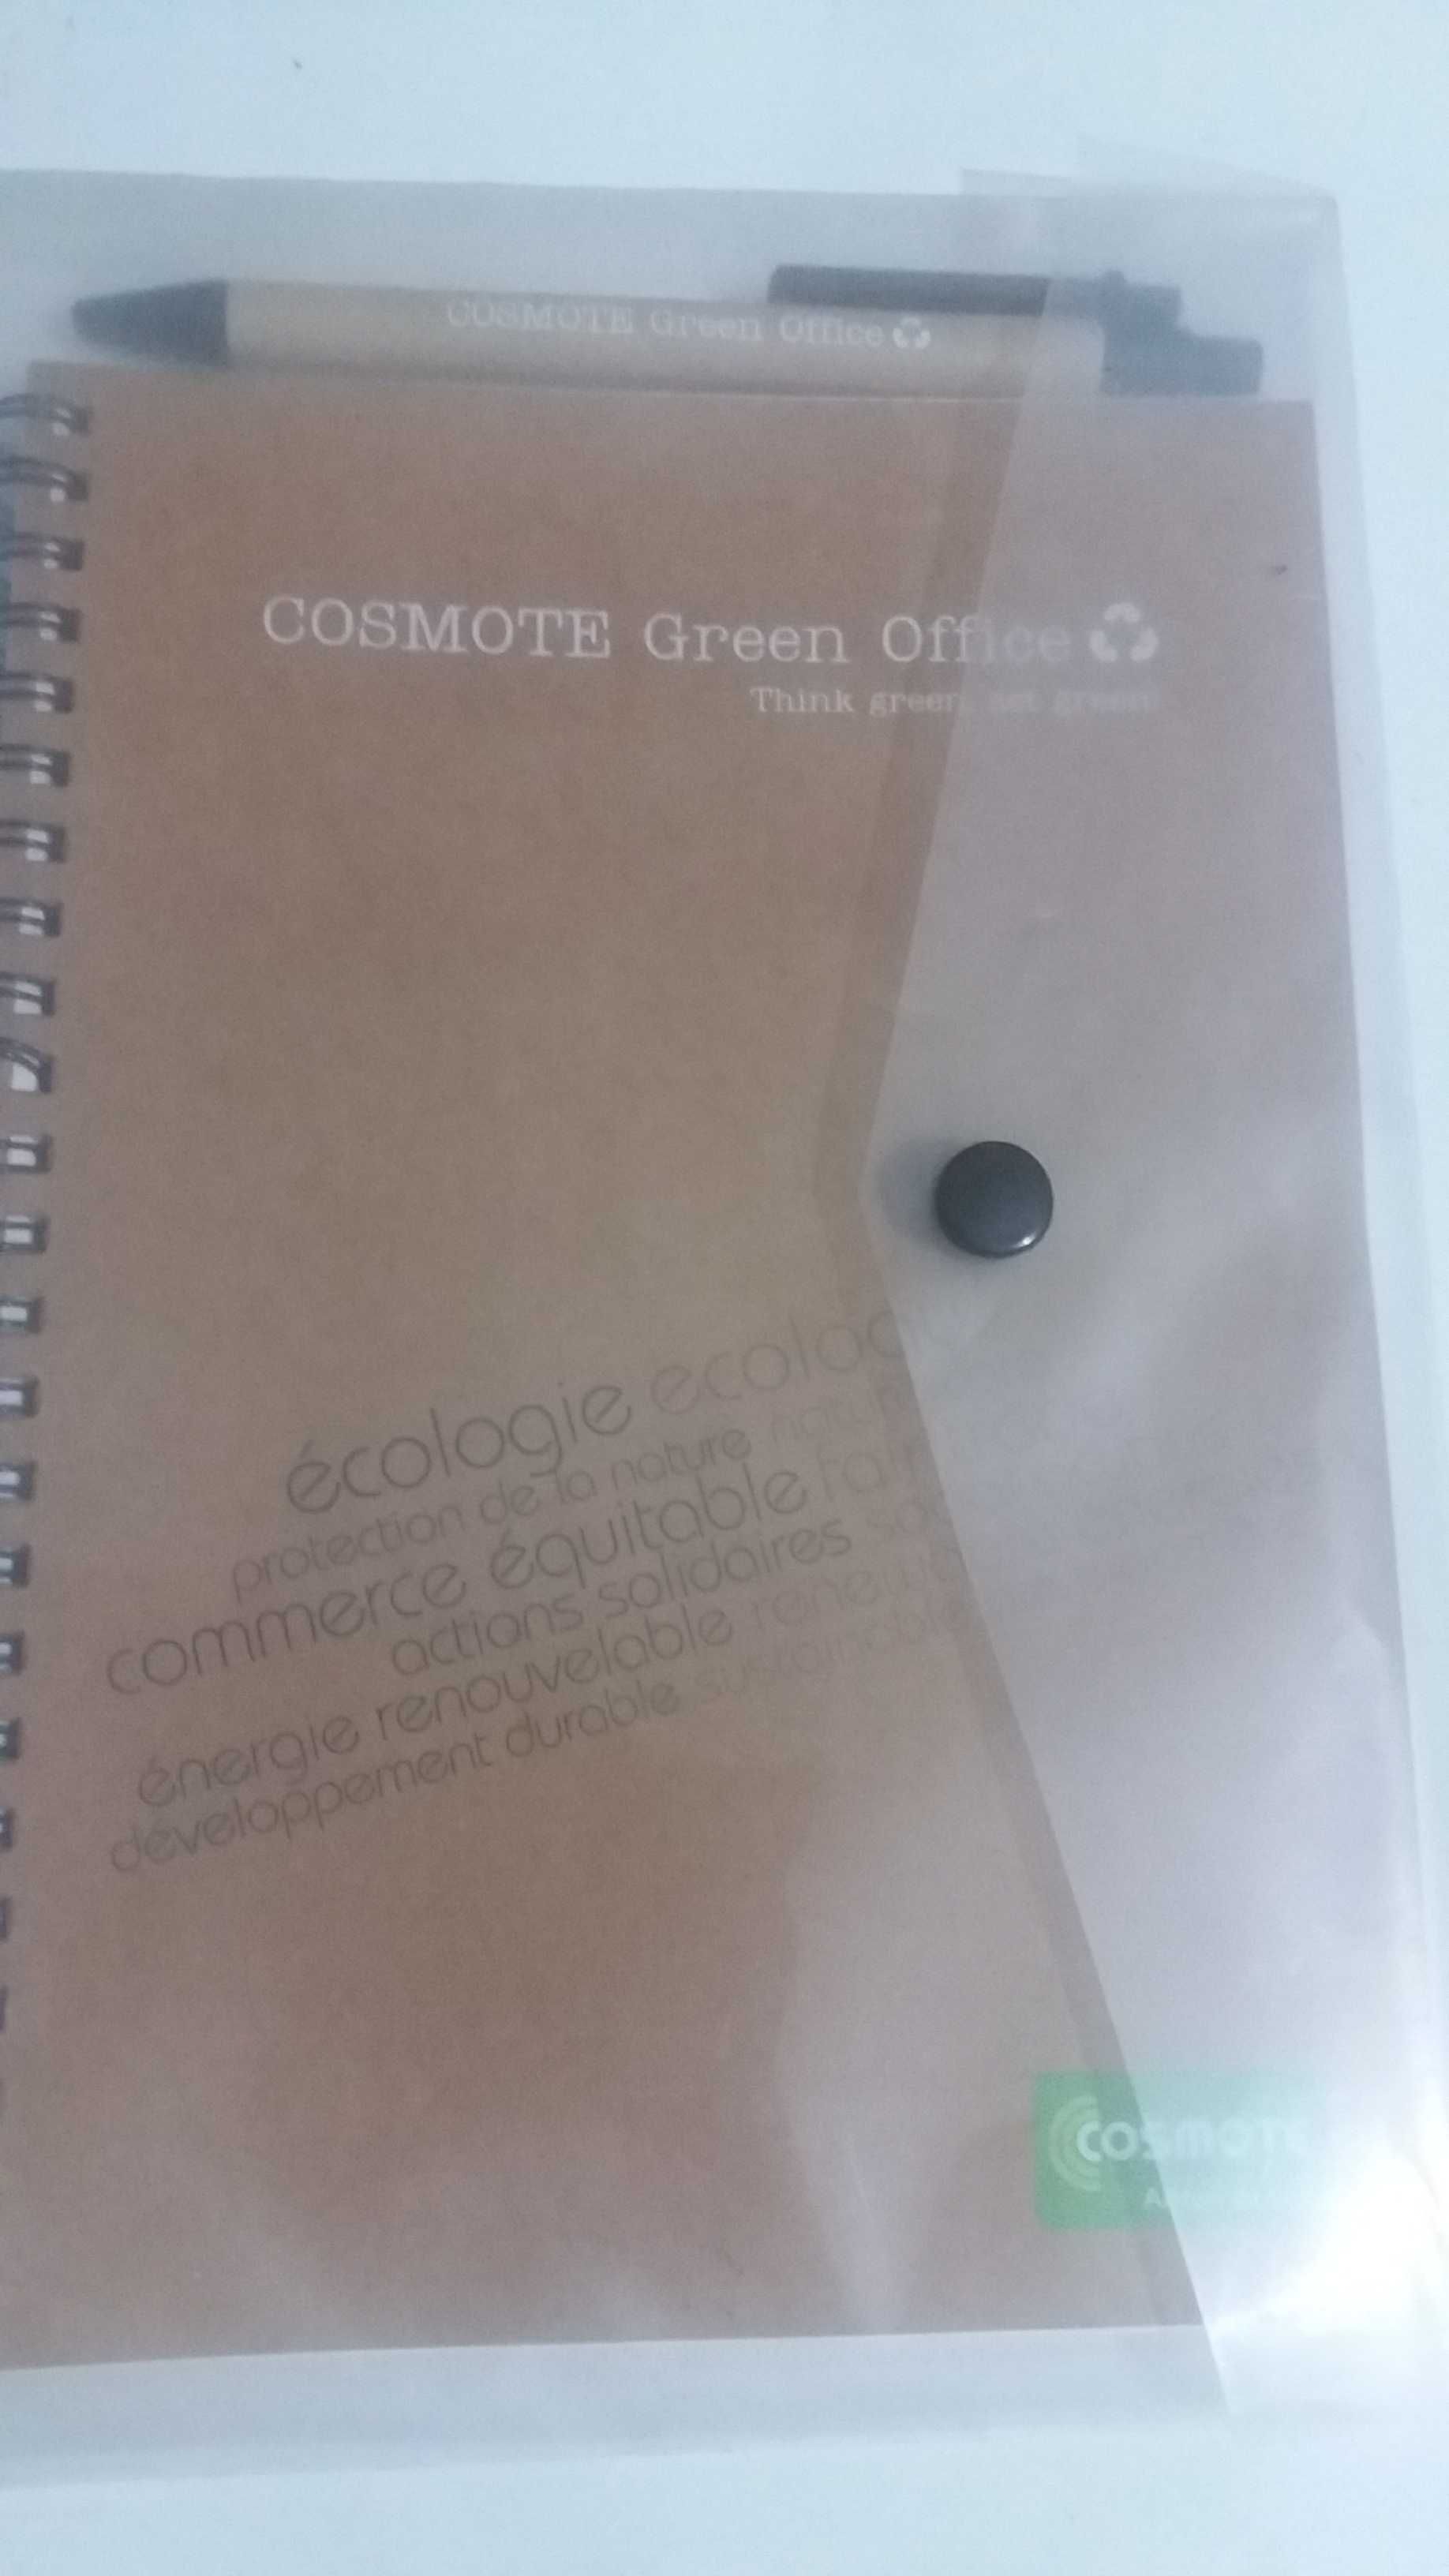 Chit Colectie**Mapa plastic+Agenda spira+Pix*Logo Cosmote Green Office